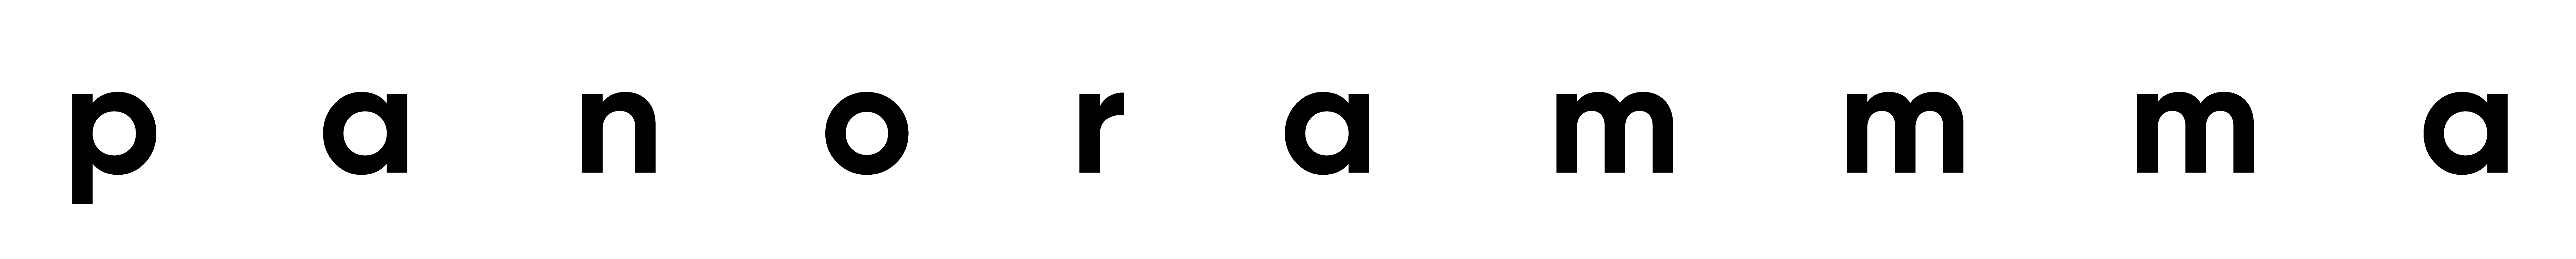 Panorammma Logoset Sourcefile Panorammma Black Variation 4 